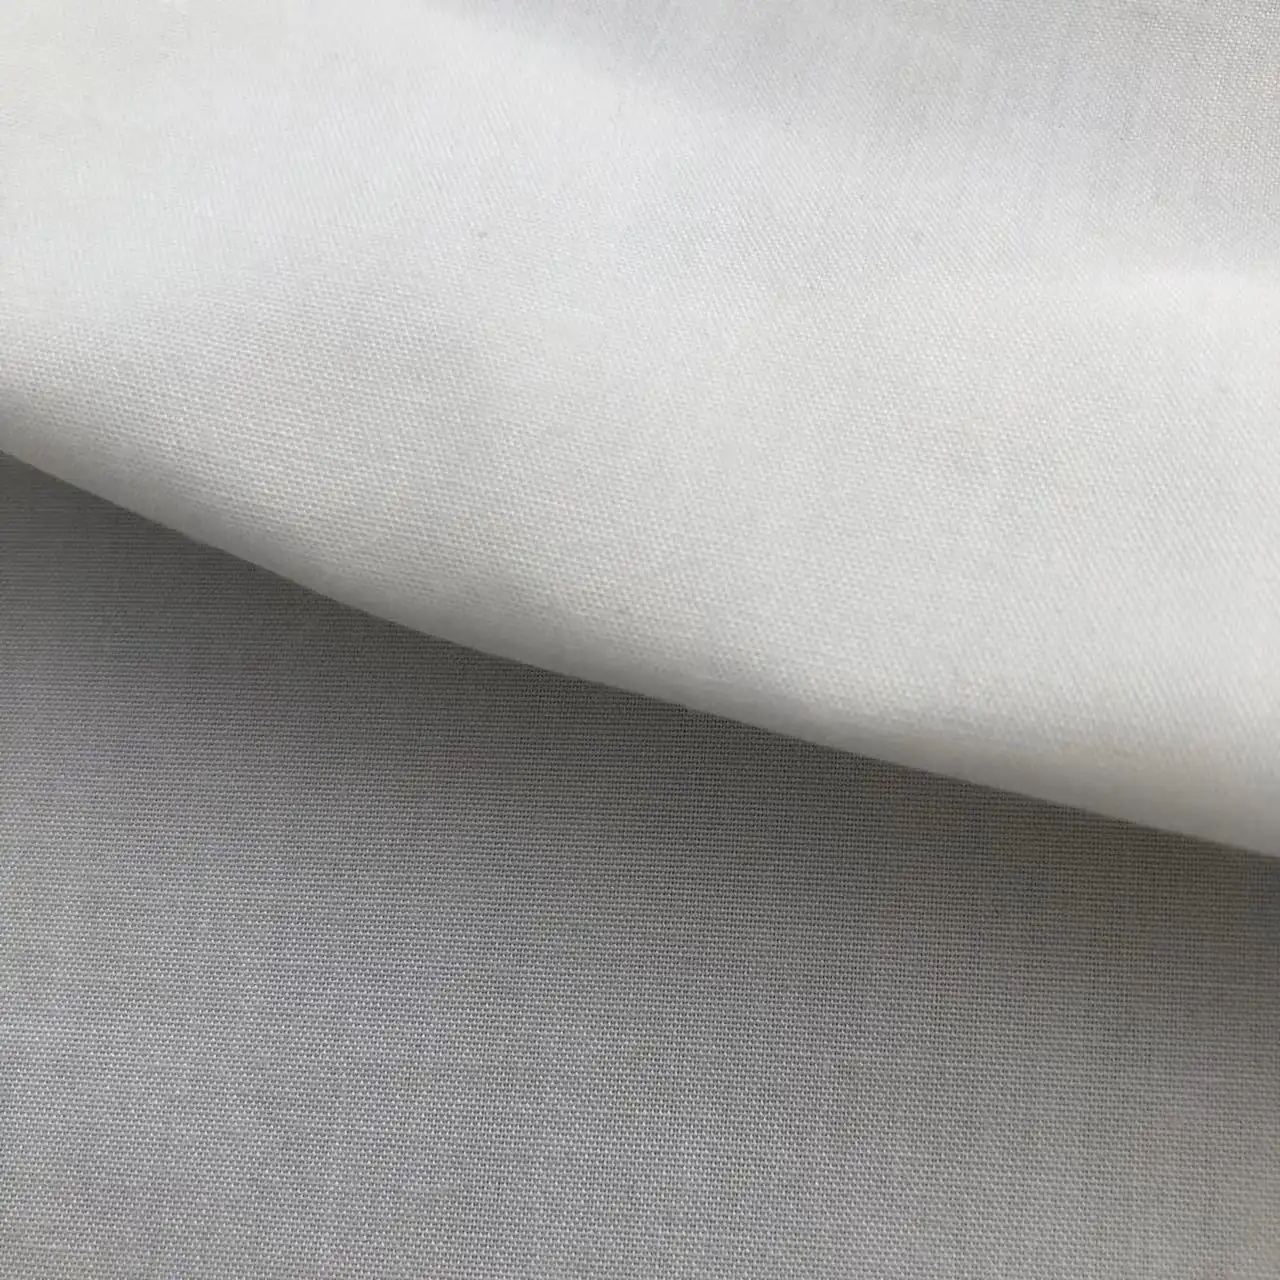 155GSM spun polyester cotton poplin sublimation print/PFP white polyester cotton like poplin fabric for digital print